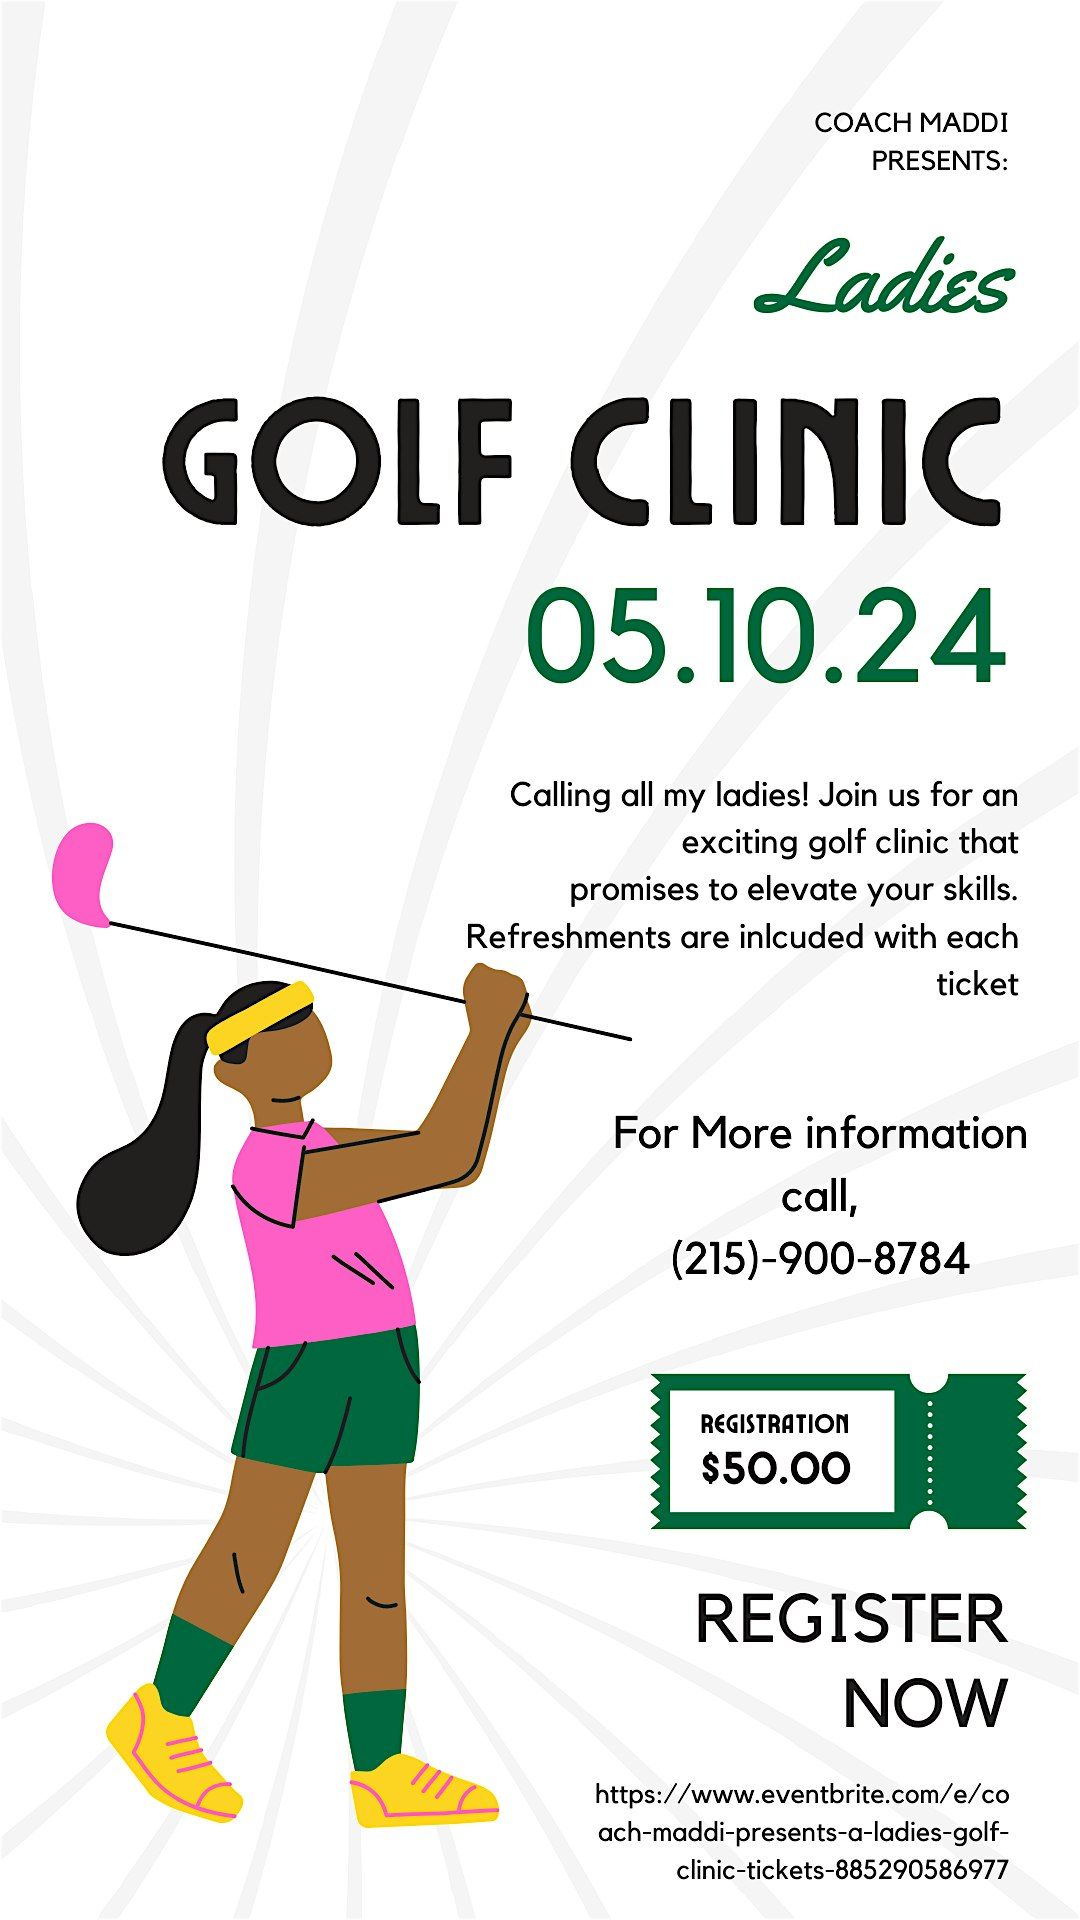 Coach Maddi Presents: A Ladies Golf Clinic